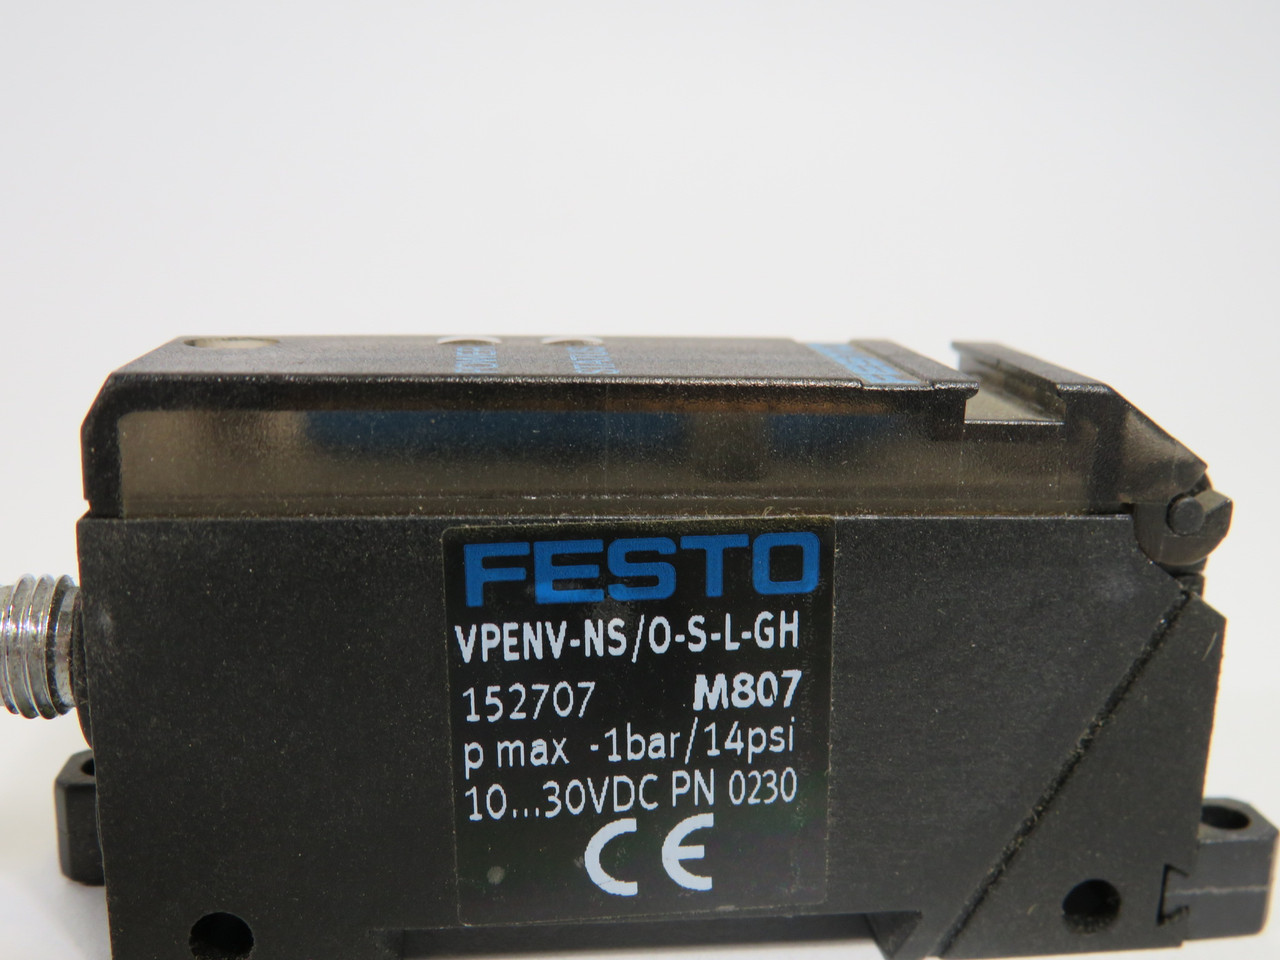 Festo 152707 VPENV-NS/O-S-L-GH Vacuum Switch 10-30VDC -1bar/14psi USED